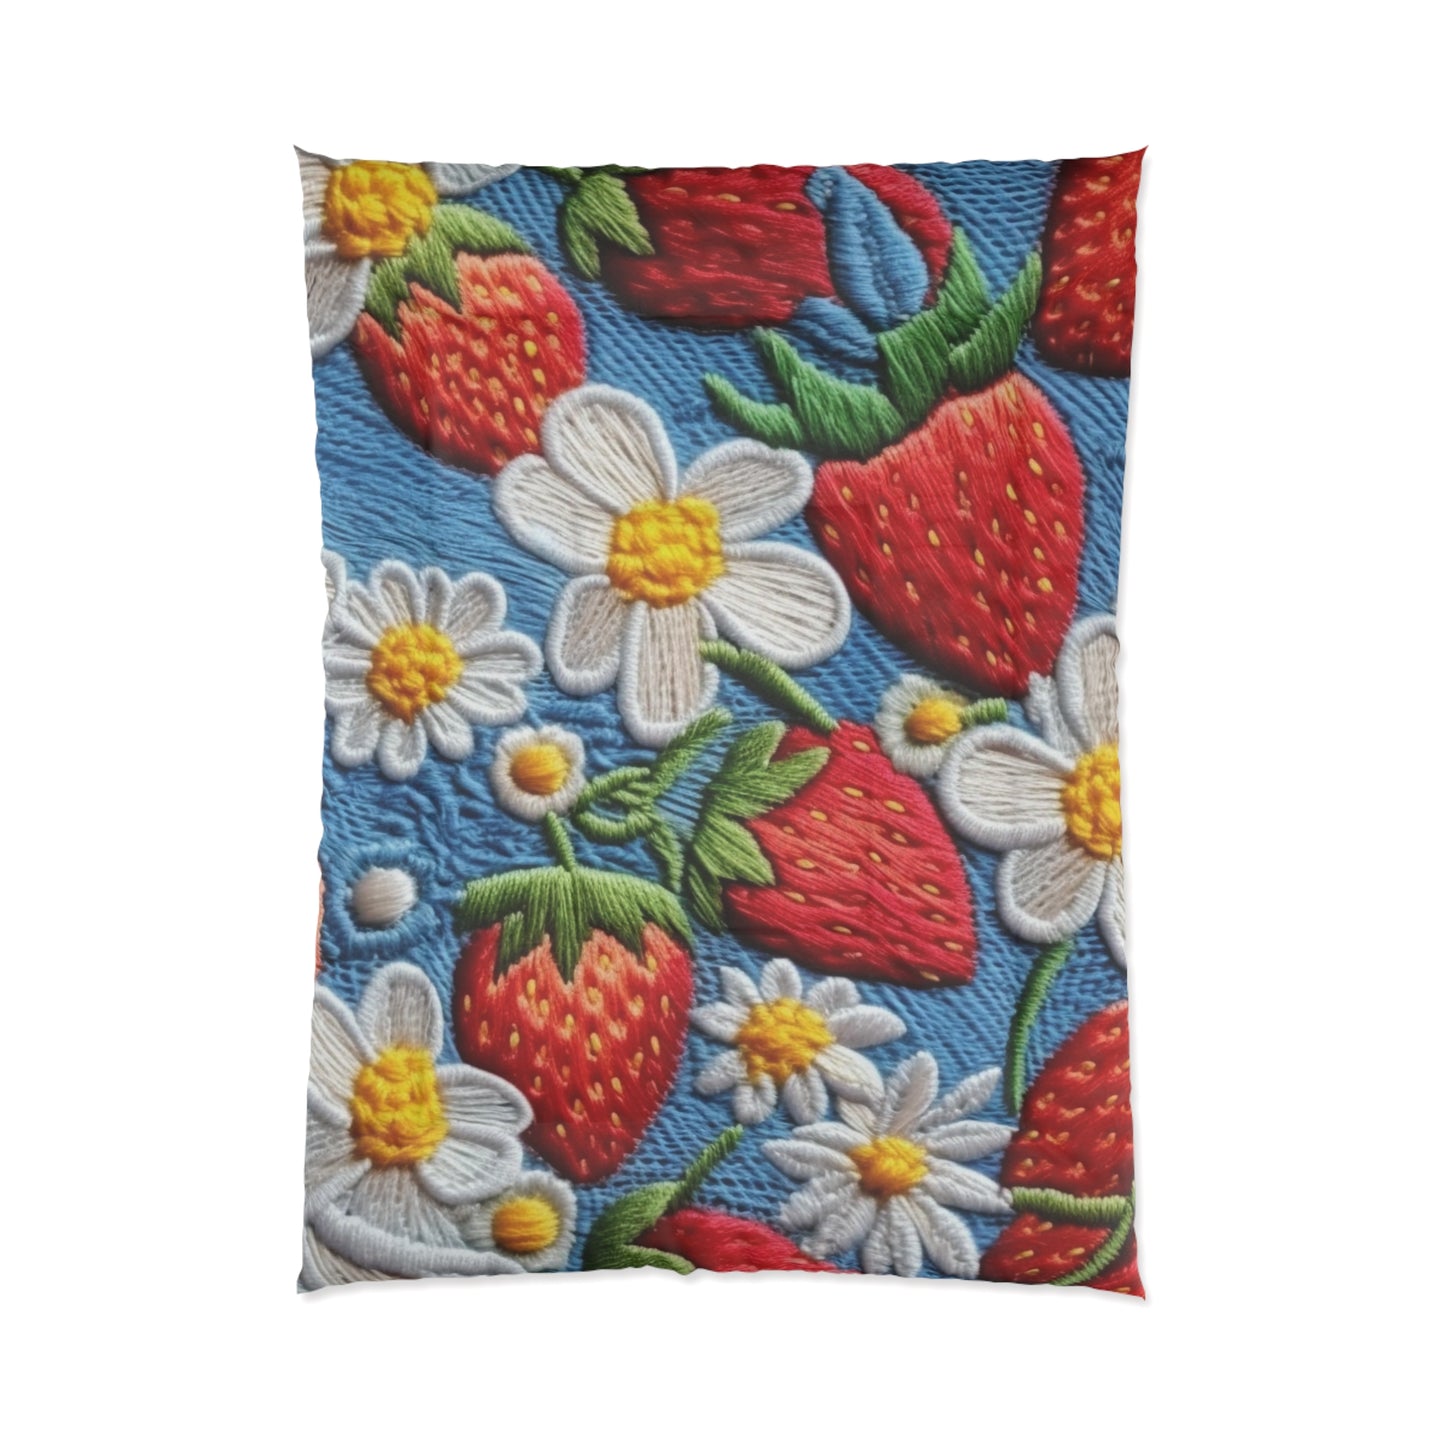 Orchard Berries: Juicy Sweetness from Nature's Garden - Fresh Strawberry Elegance - Bed Comforter